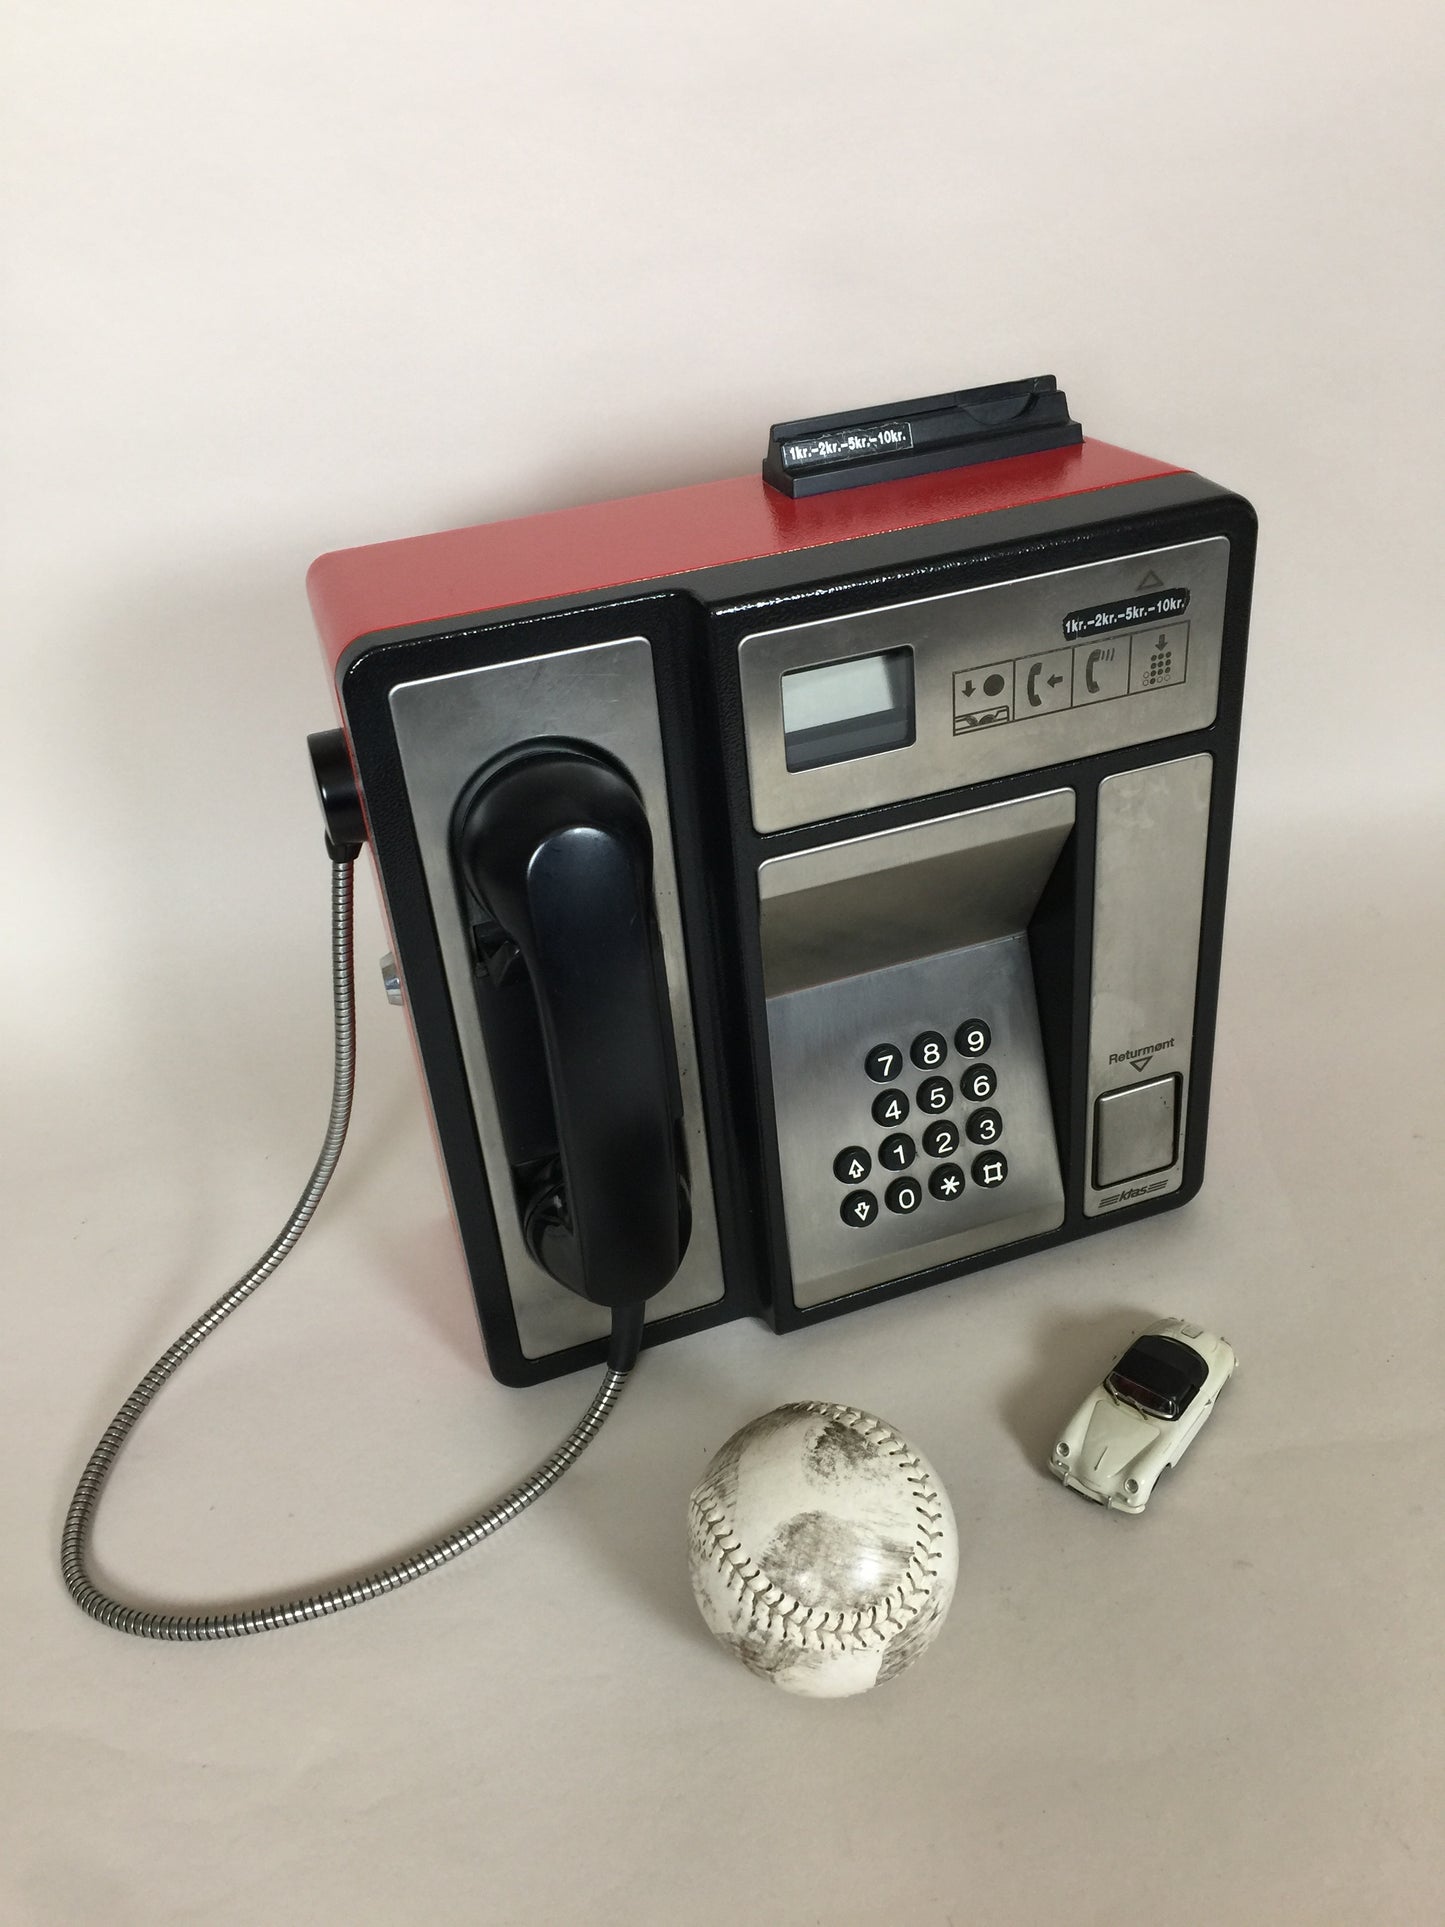 Altes KTAS-Telefon mit Kuppel